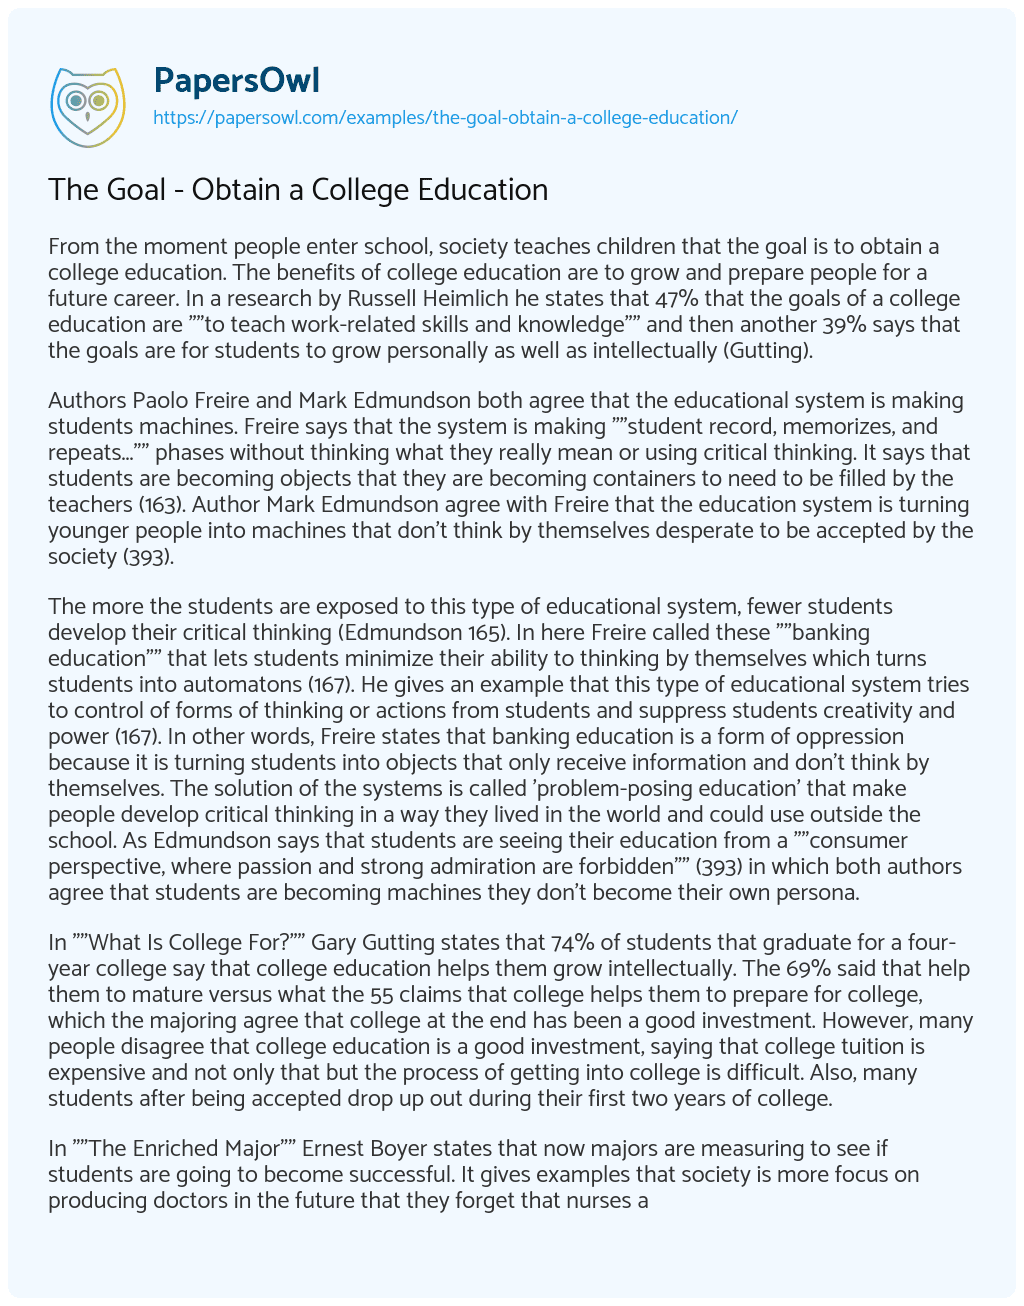 Essay on The Goal – Obtain a College Education